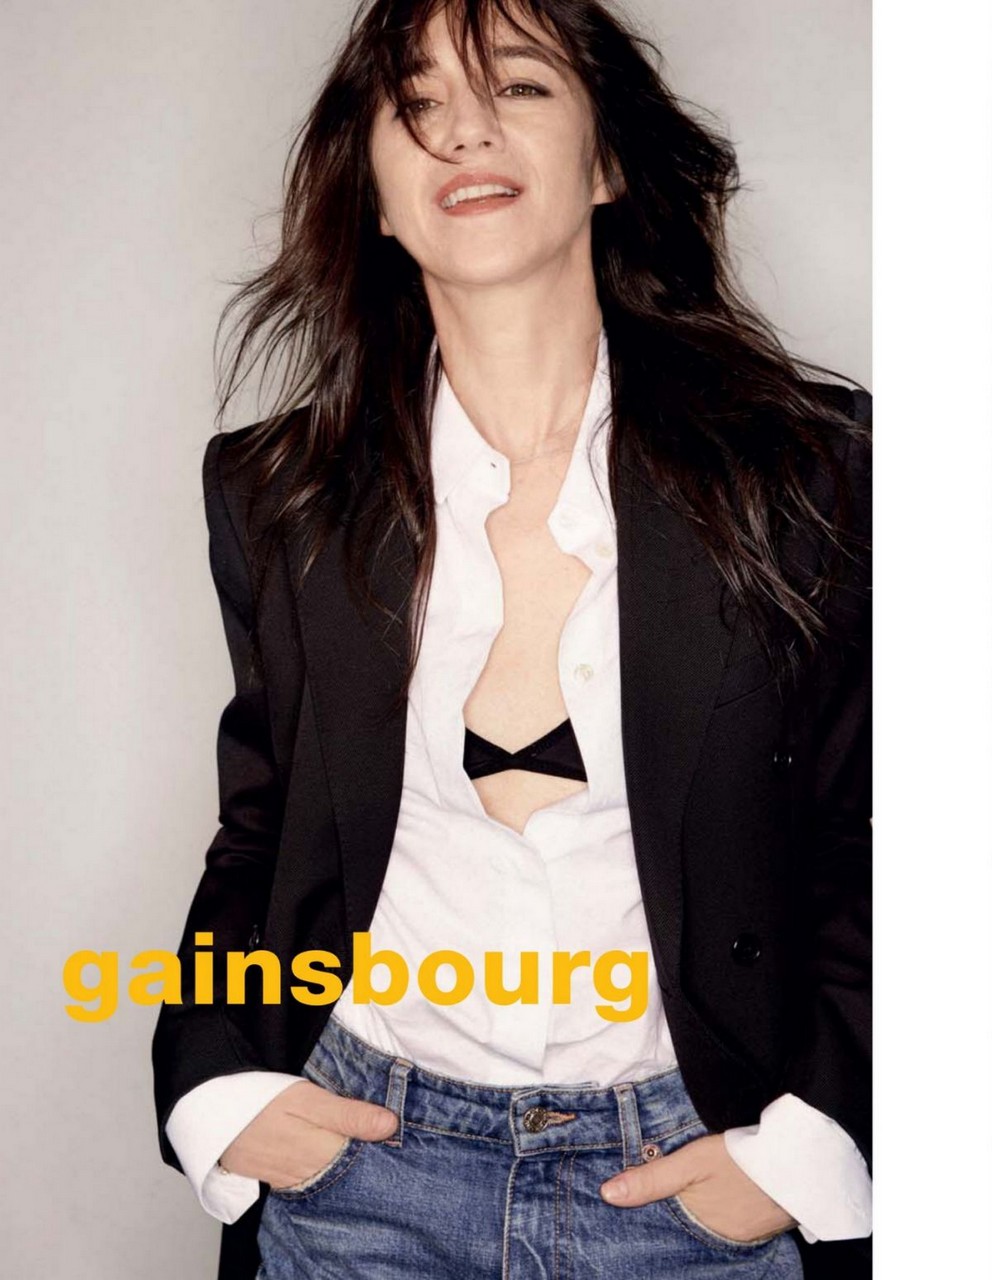 Charlotte Gainsbourg Psychologies Magazine France January